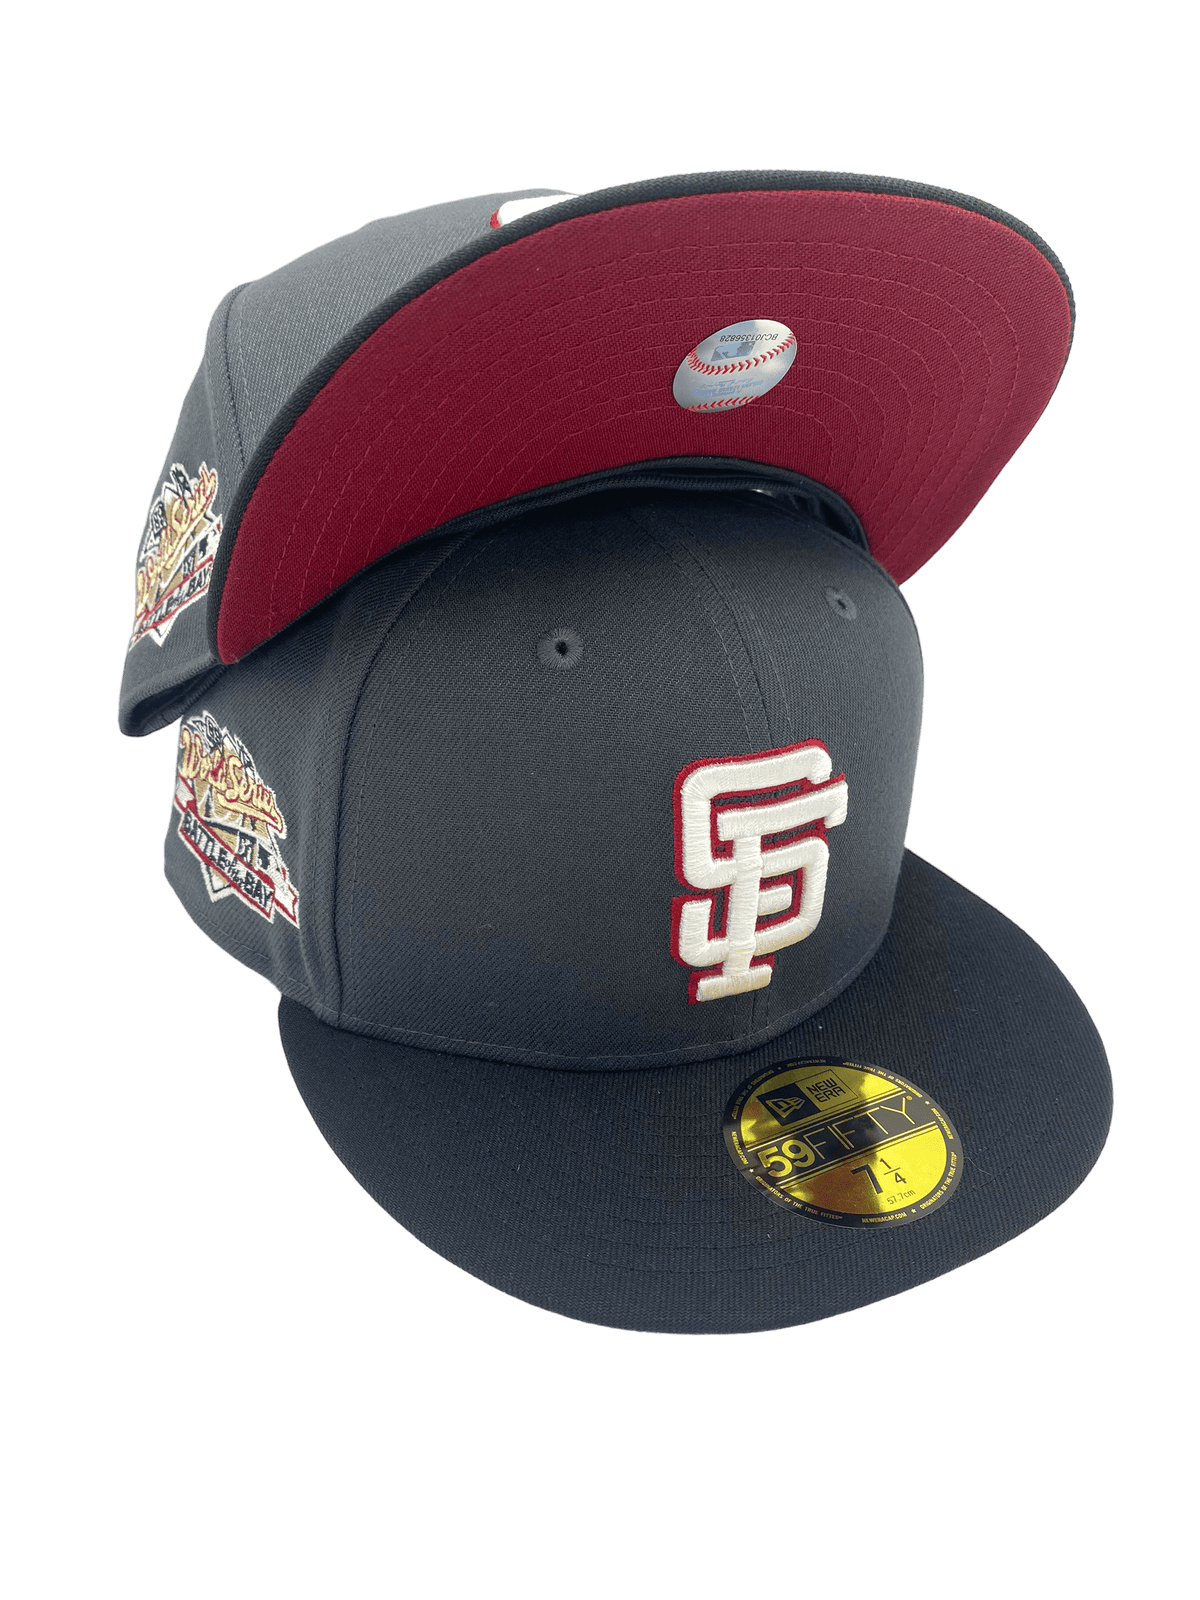 giants baseball caps